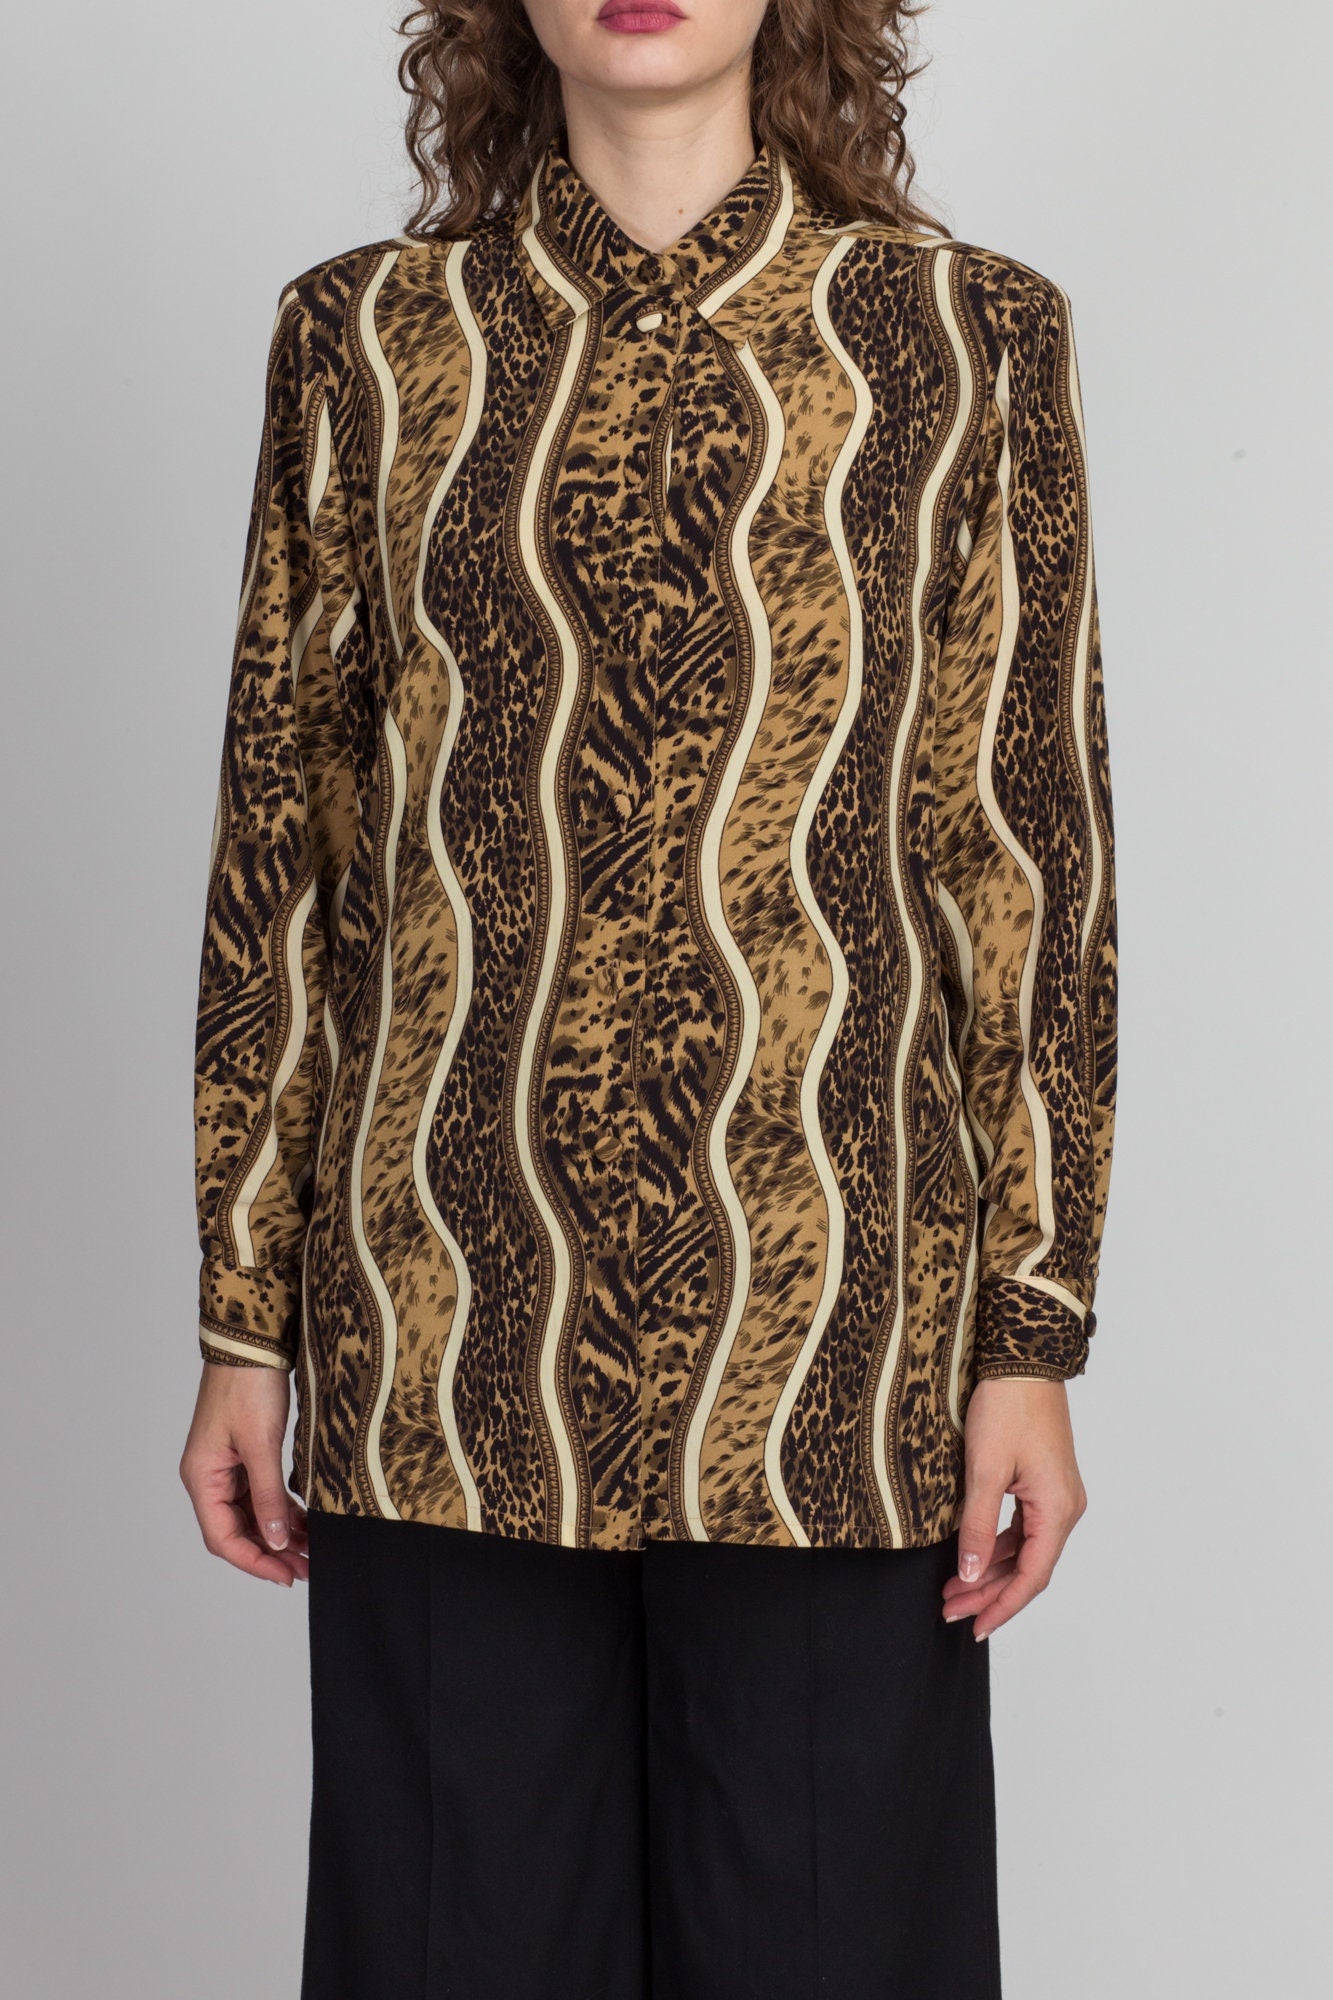 80s Wavy Striped Leopard Print Oversize Blouse - Medium 